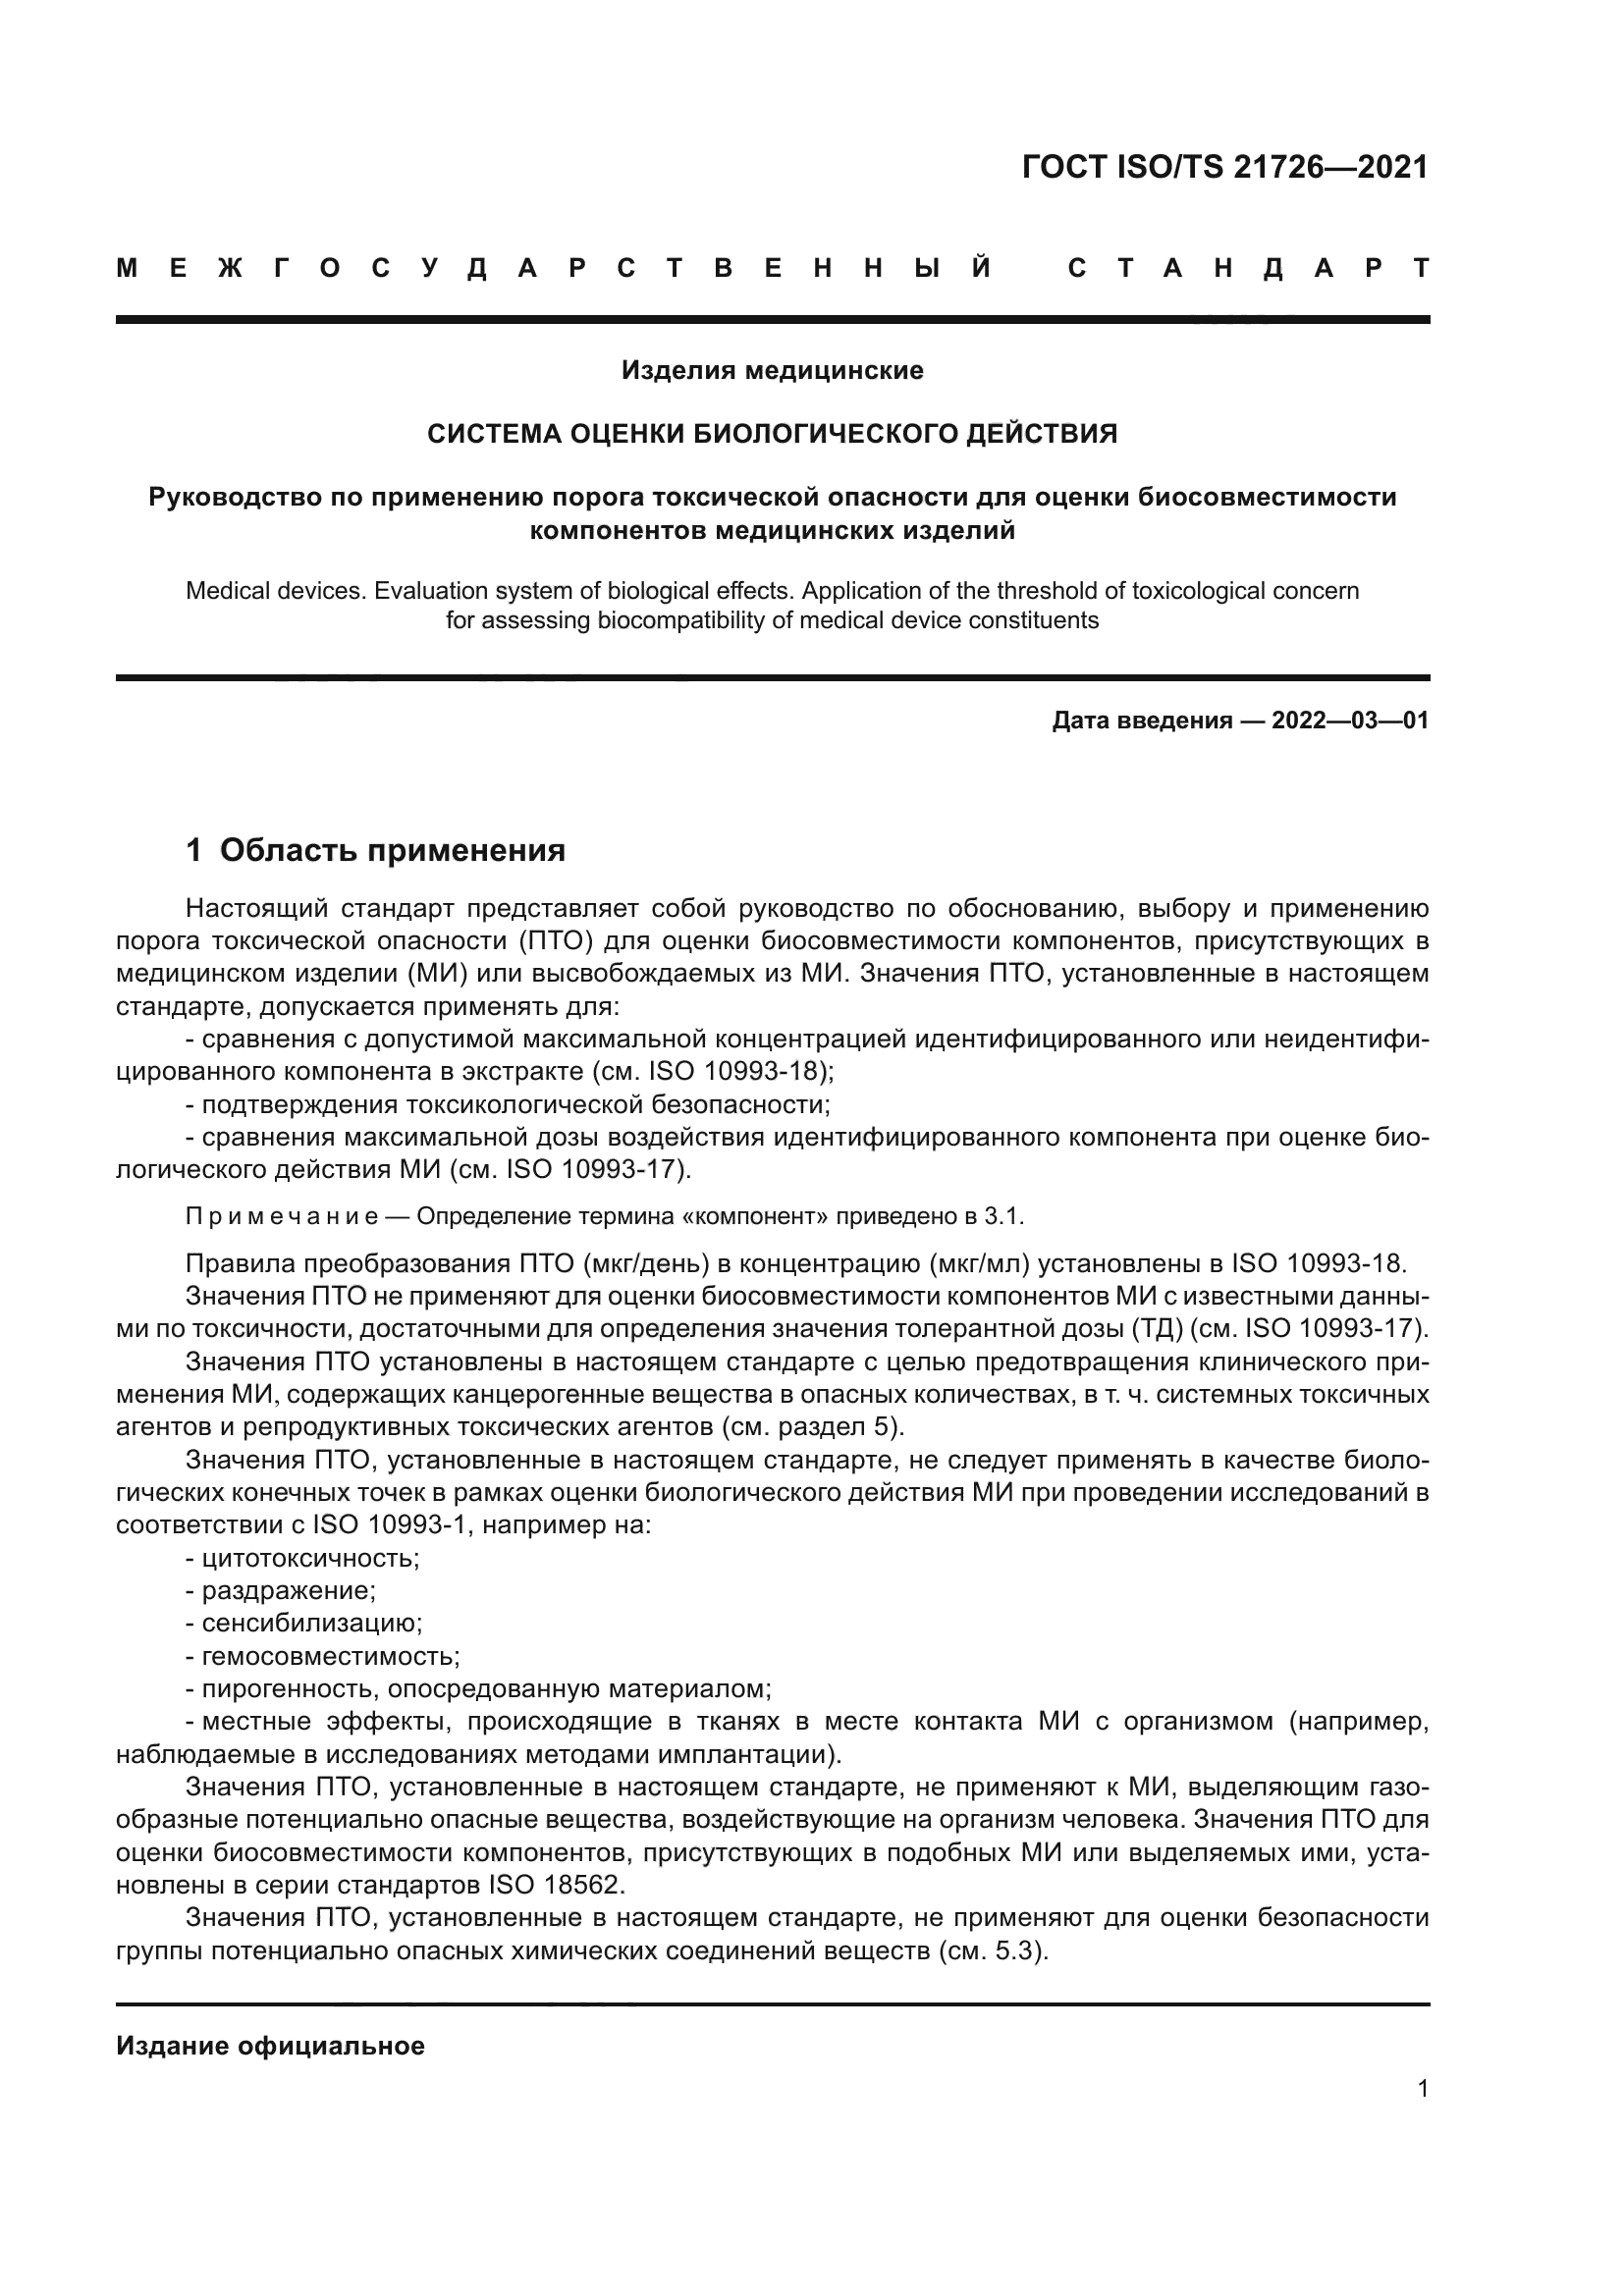 ГОСТ ISO/TS 21726-2021